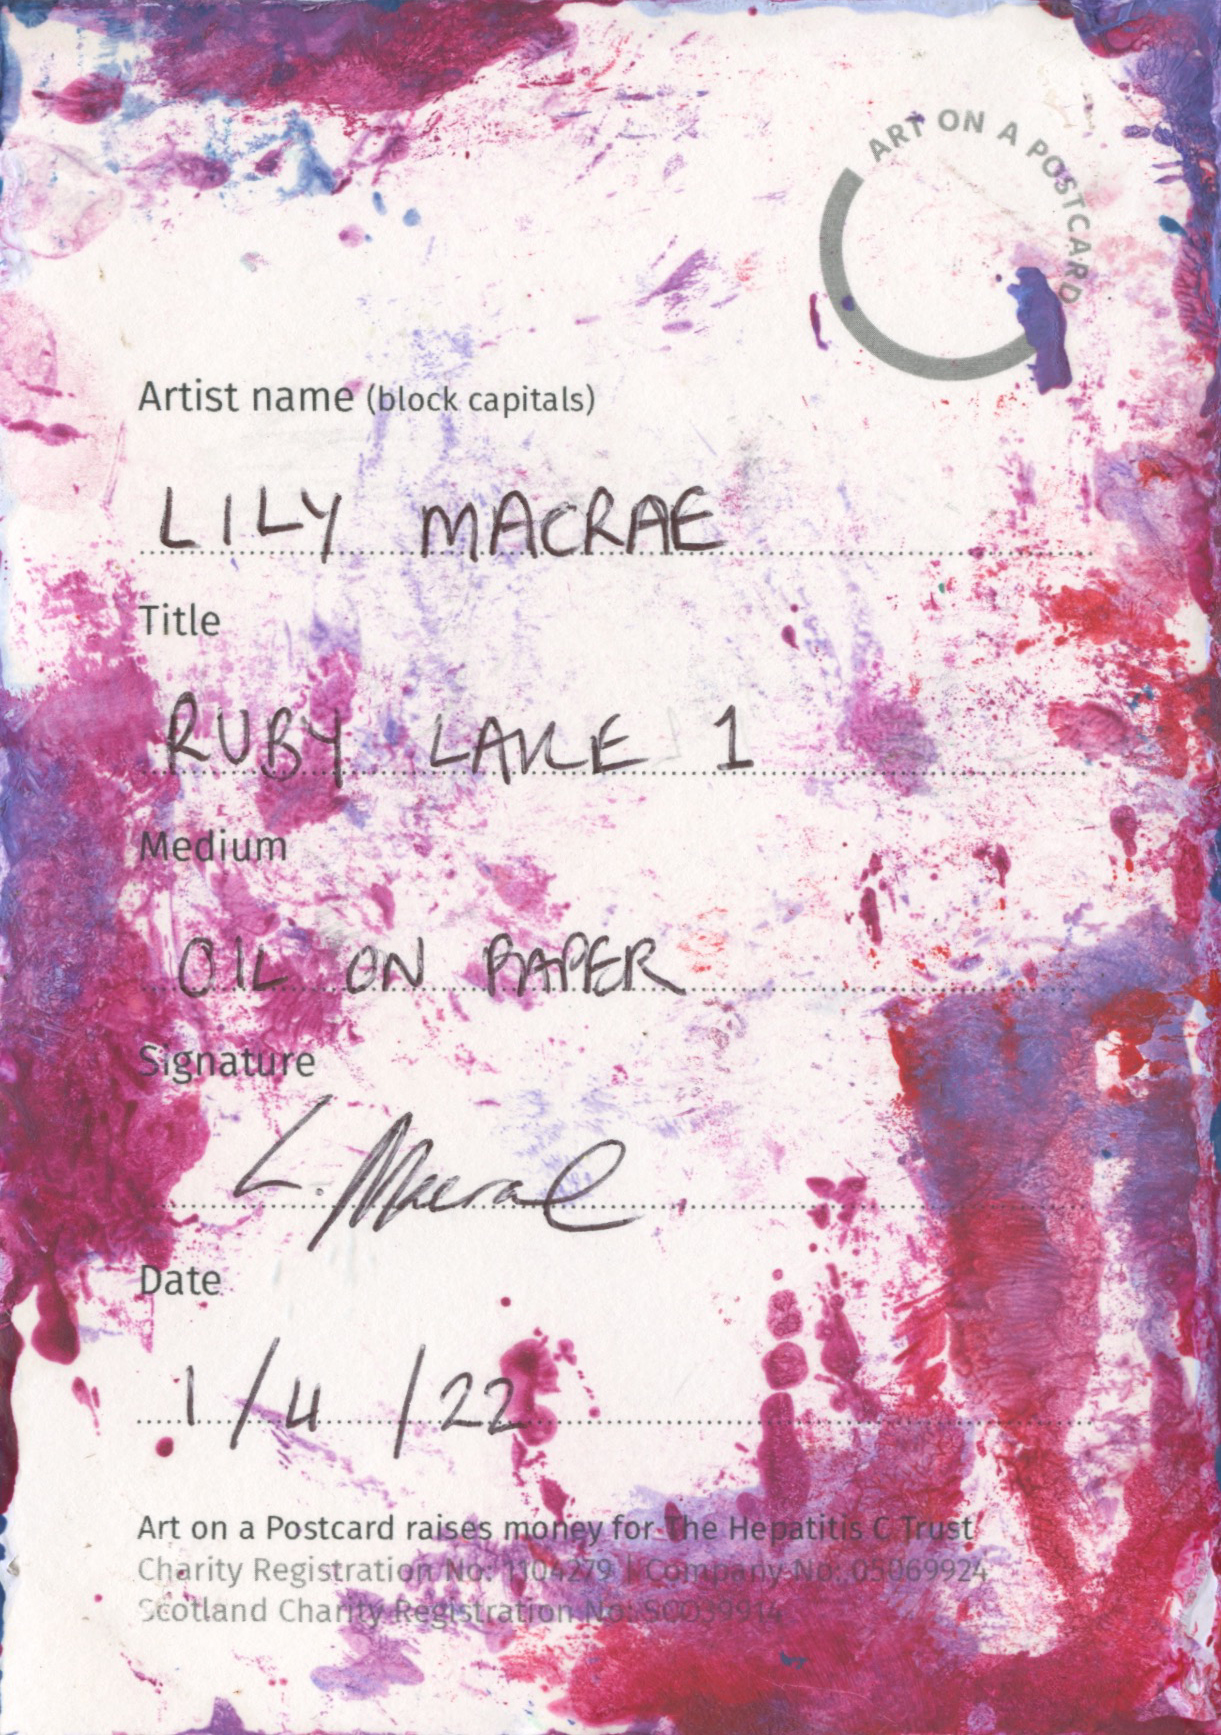 46. Lily Macrae - Ruby Lake I - BACK